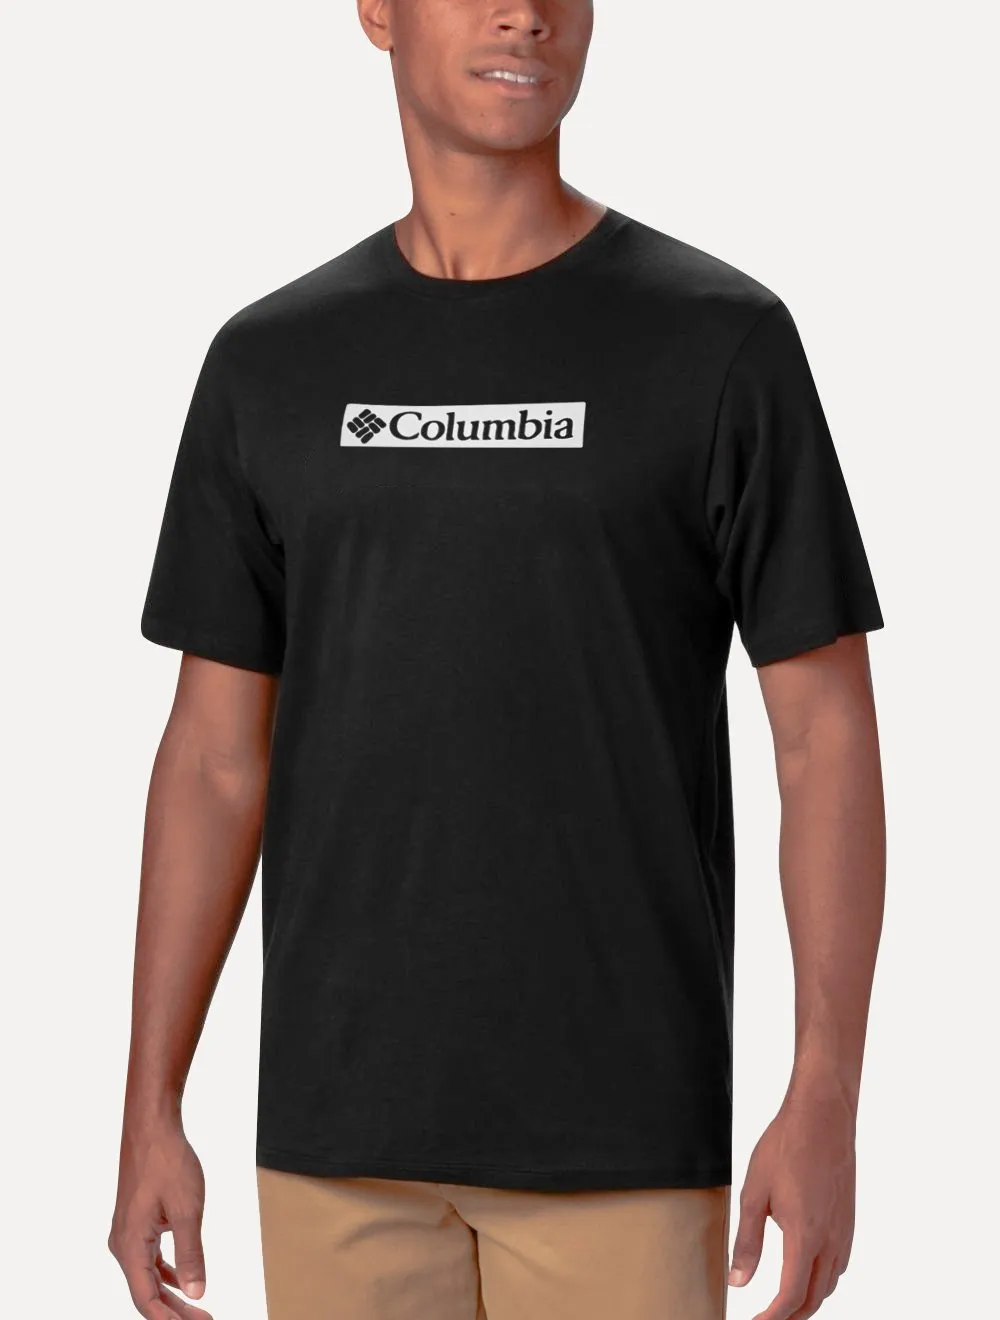 Camiseta Columbia Masculina Regular Branded Label Preta